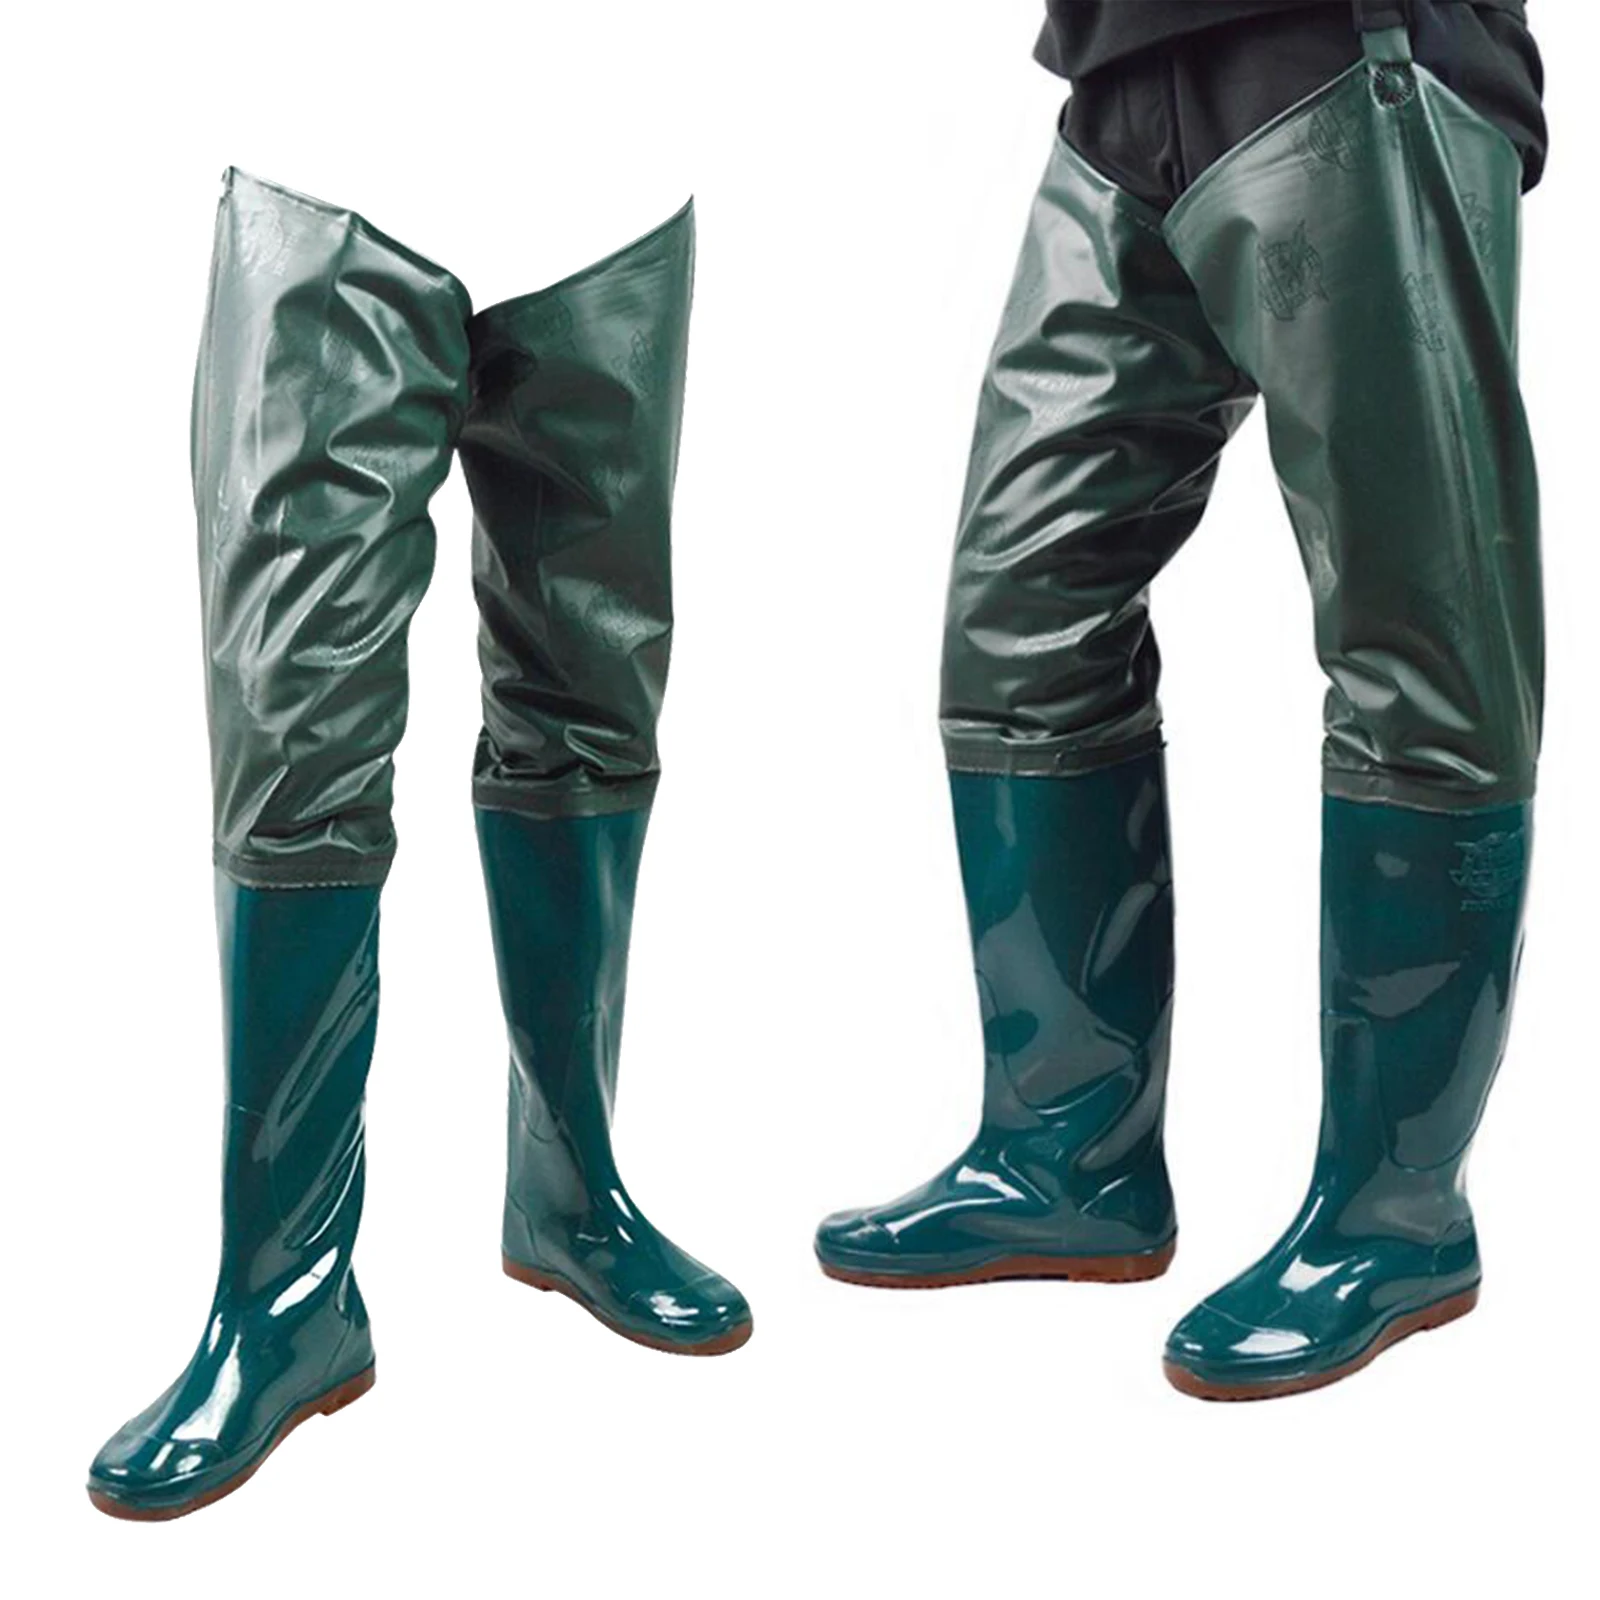 Durable Hip Waders Lightweight Waterproof Hip Boots Unisex PVC/Nylon Fishing Hunting Bootfoot Waterproof Water Pants Boots